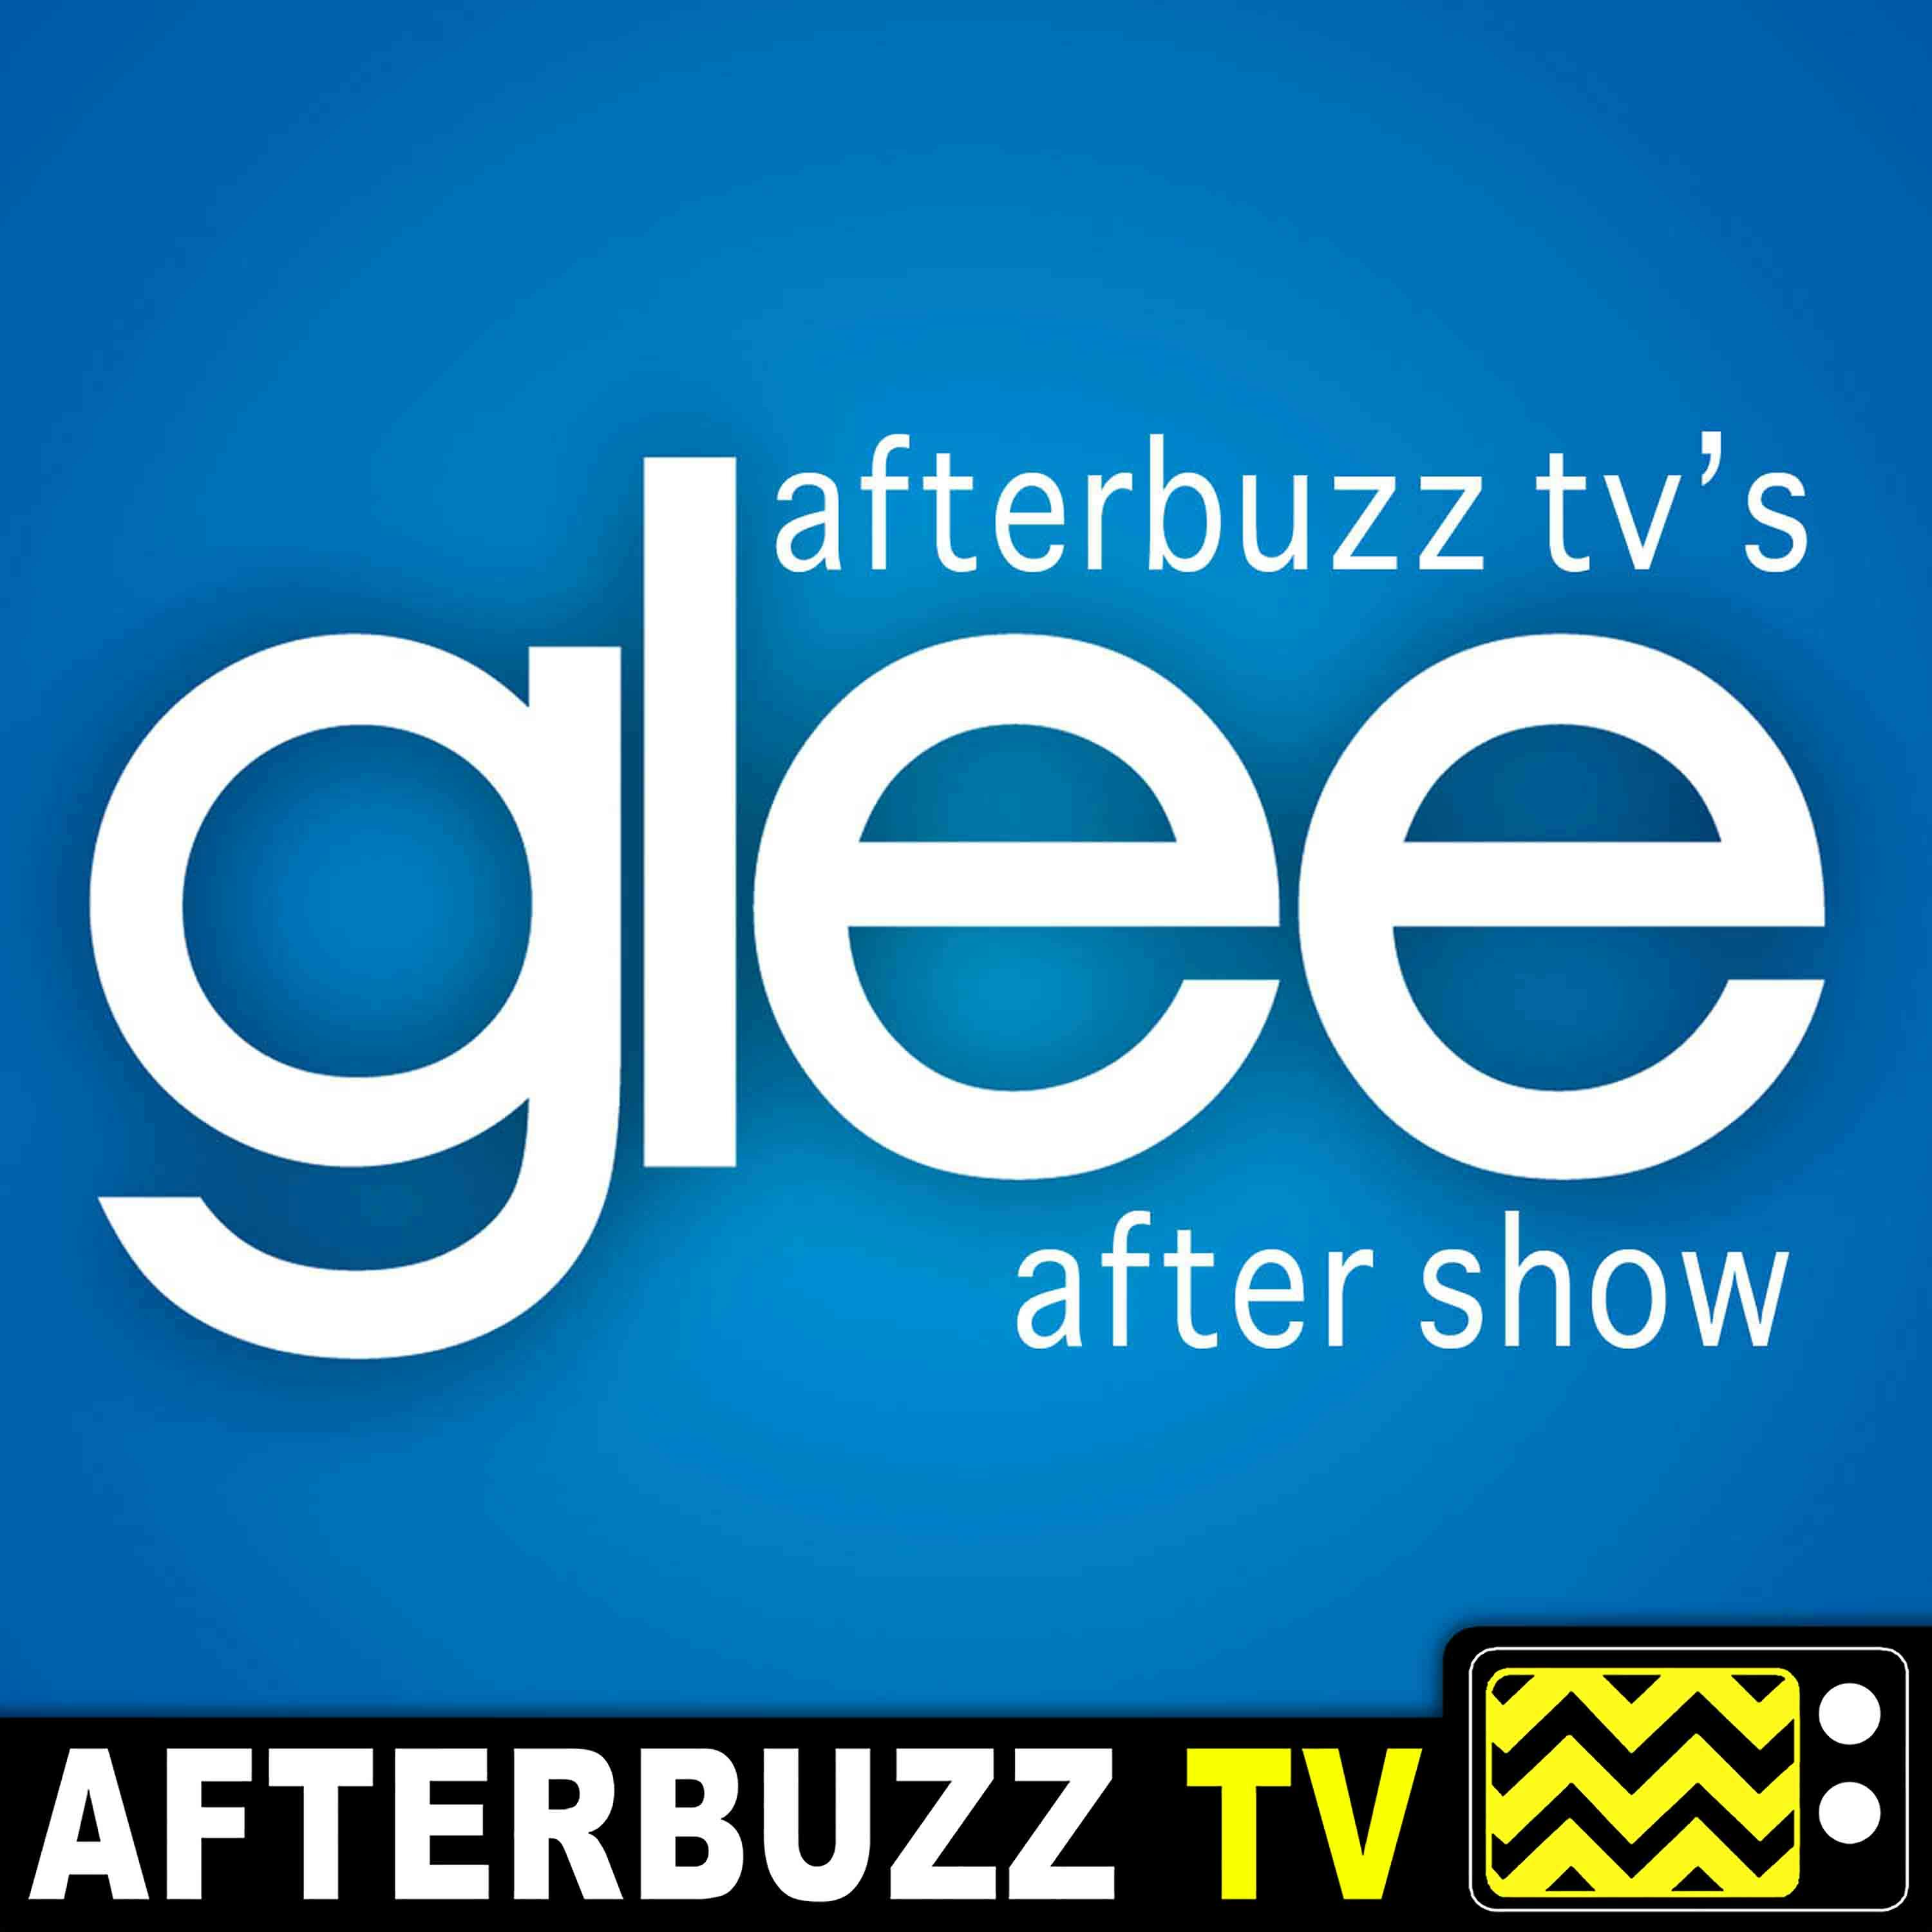 Glee S:6 | The Hurt Locker Pt. 2 E:5 | AfterBuzz TV AfterShow